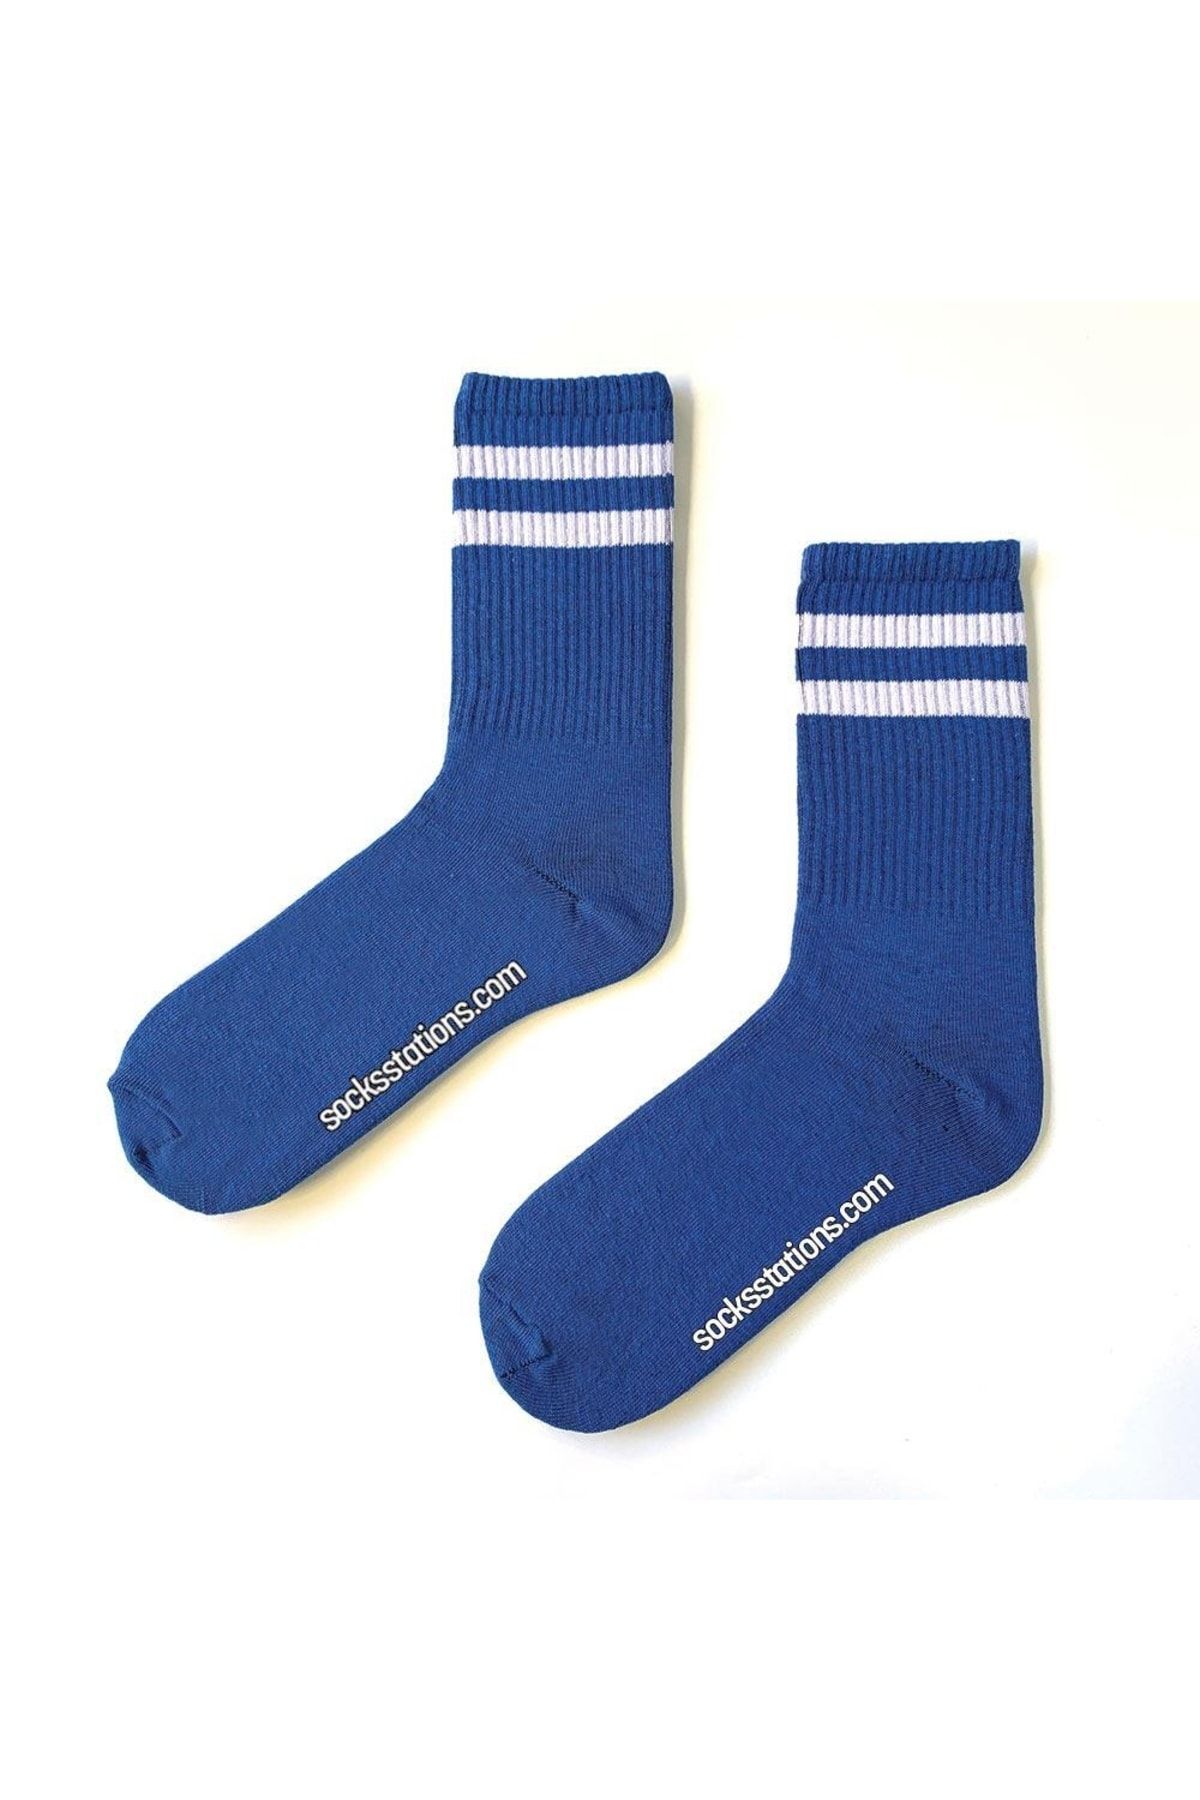 Socks Stations Ünisex Mavi Renkli , Beyaz Çizgili Uzun Kolej Spor Çorap